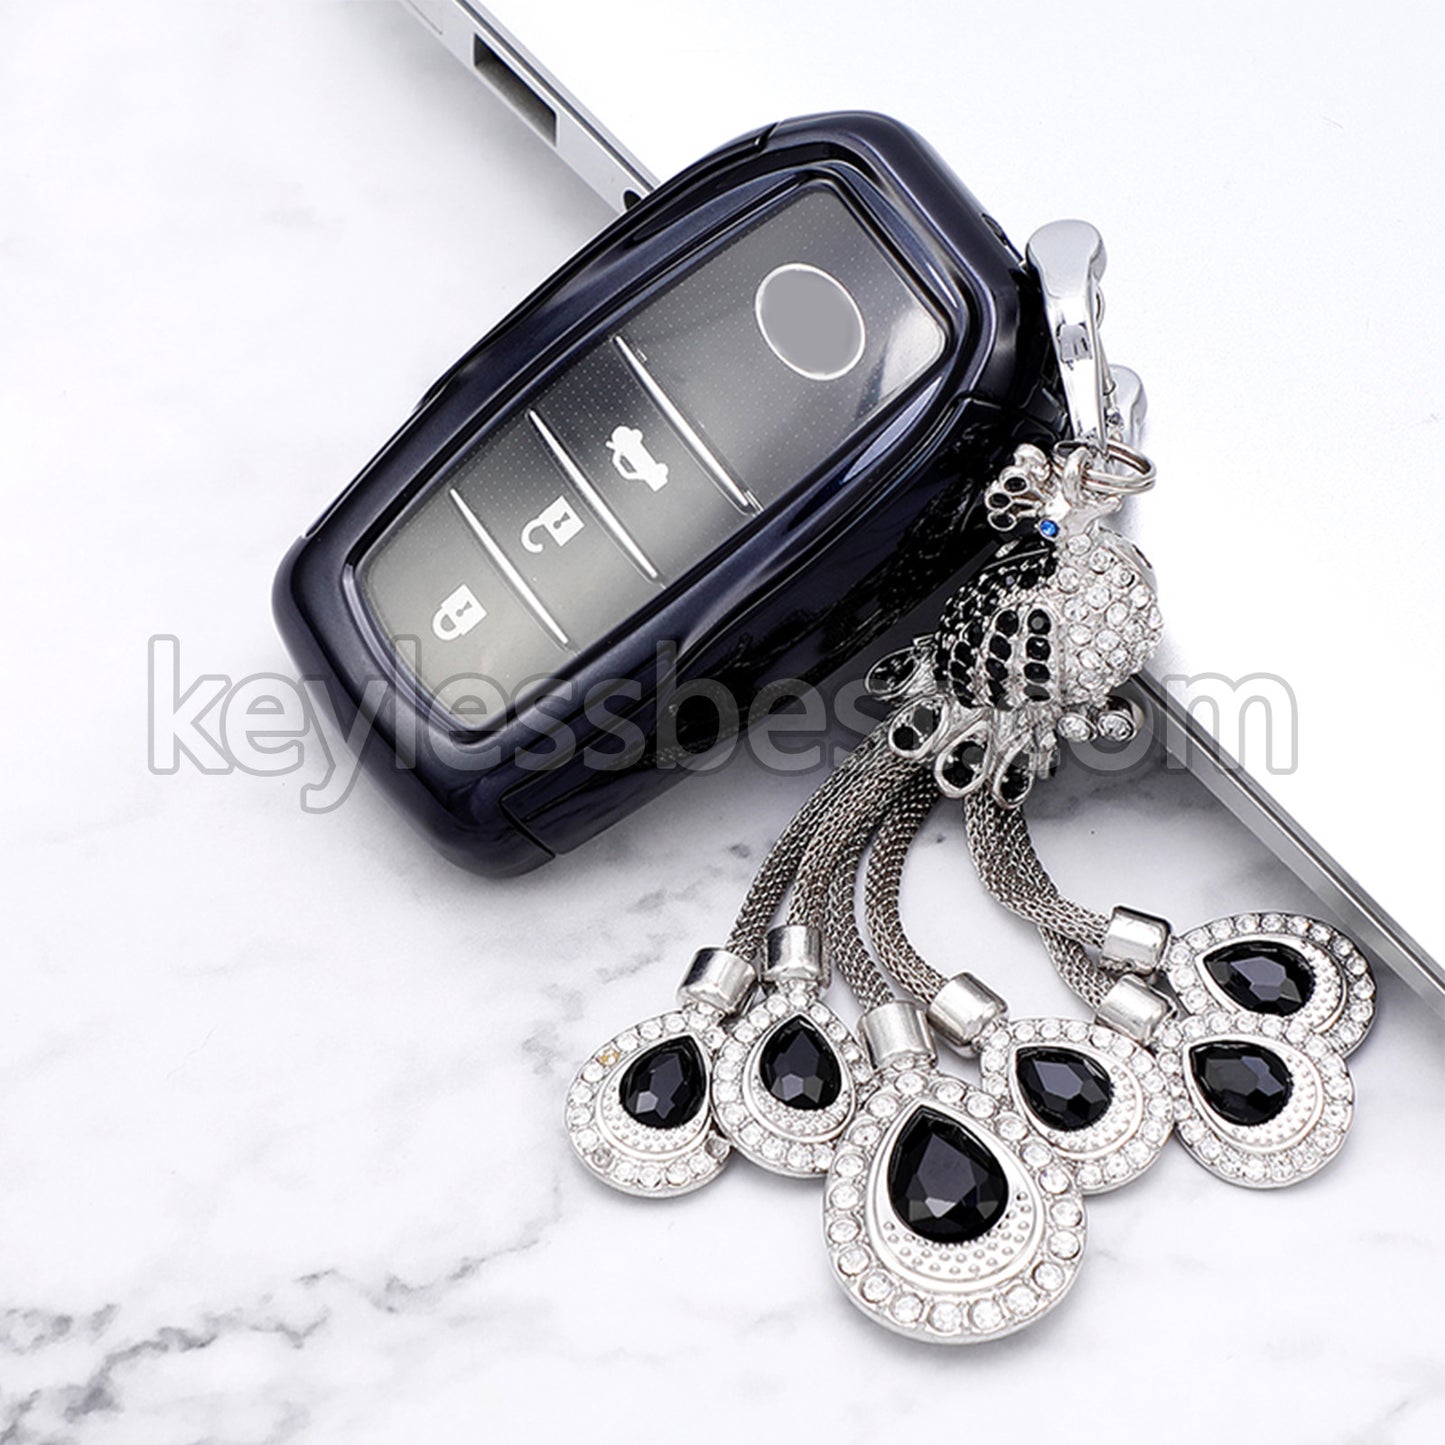 TPU Car Key cover For Toyota Car Key cover case holder